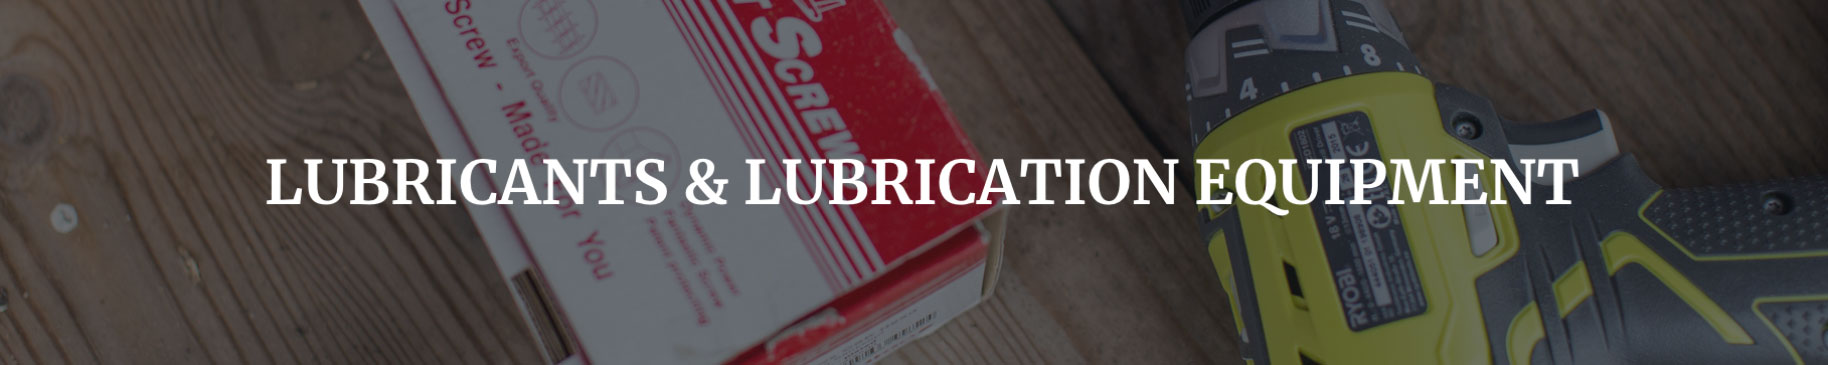 Lubricants lubrication equipment vip industrial supplies